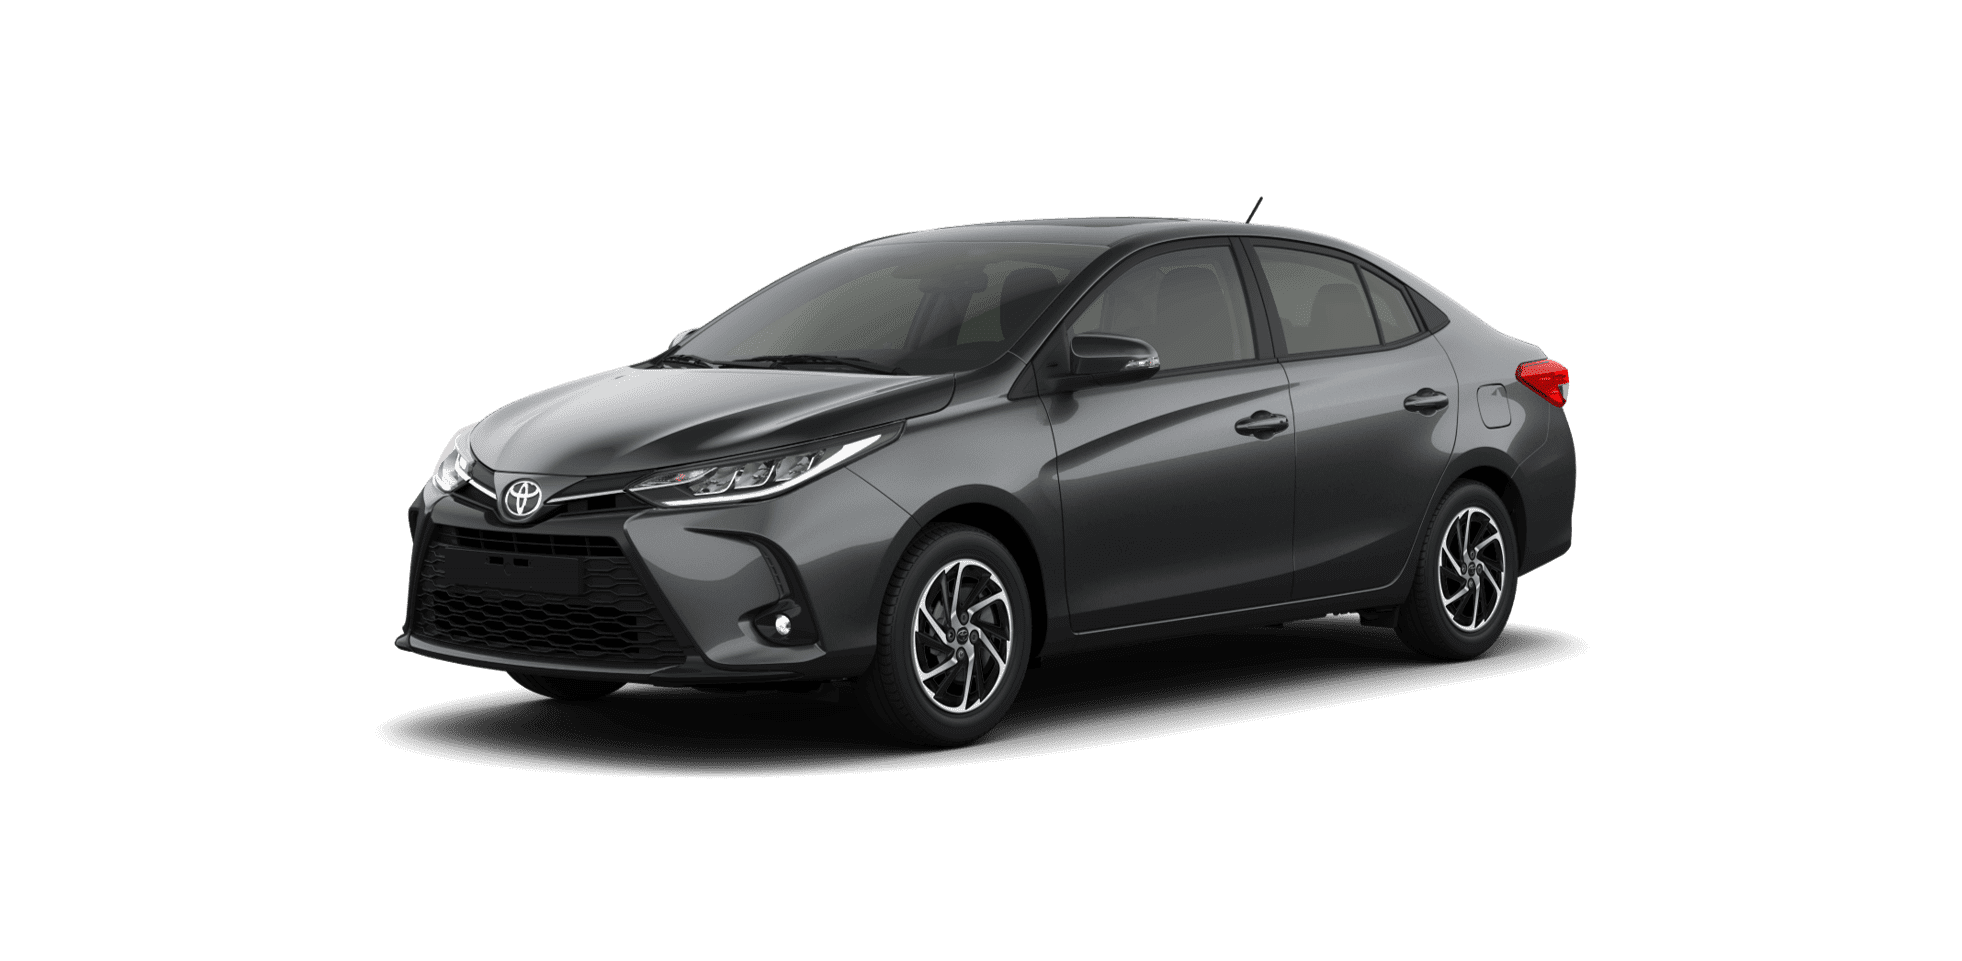 Toyota Yaris Sedã (Reprodução - Toyota)